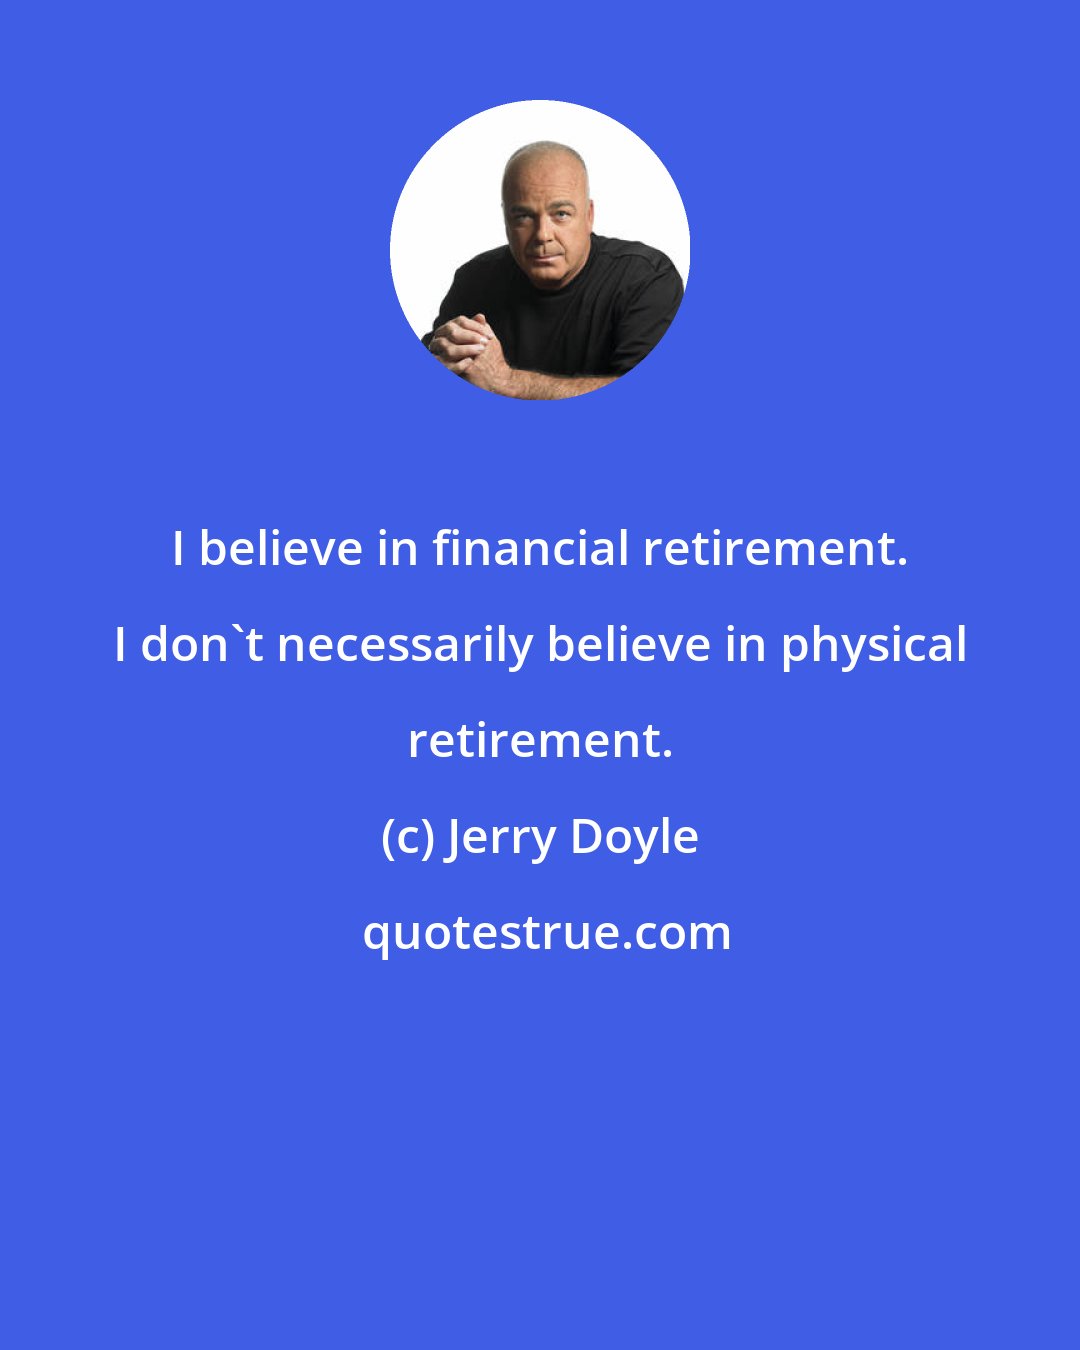 Jerry Doyle: I believe in financial retirement. I don't necessarily believe in physical retirement.